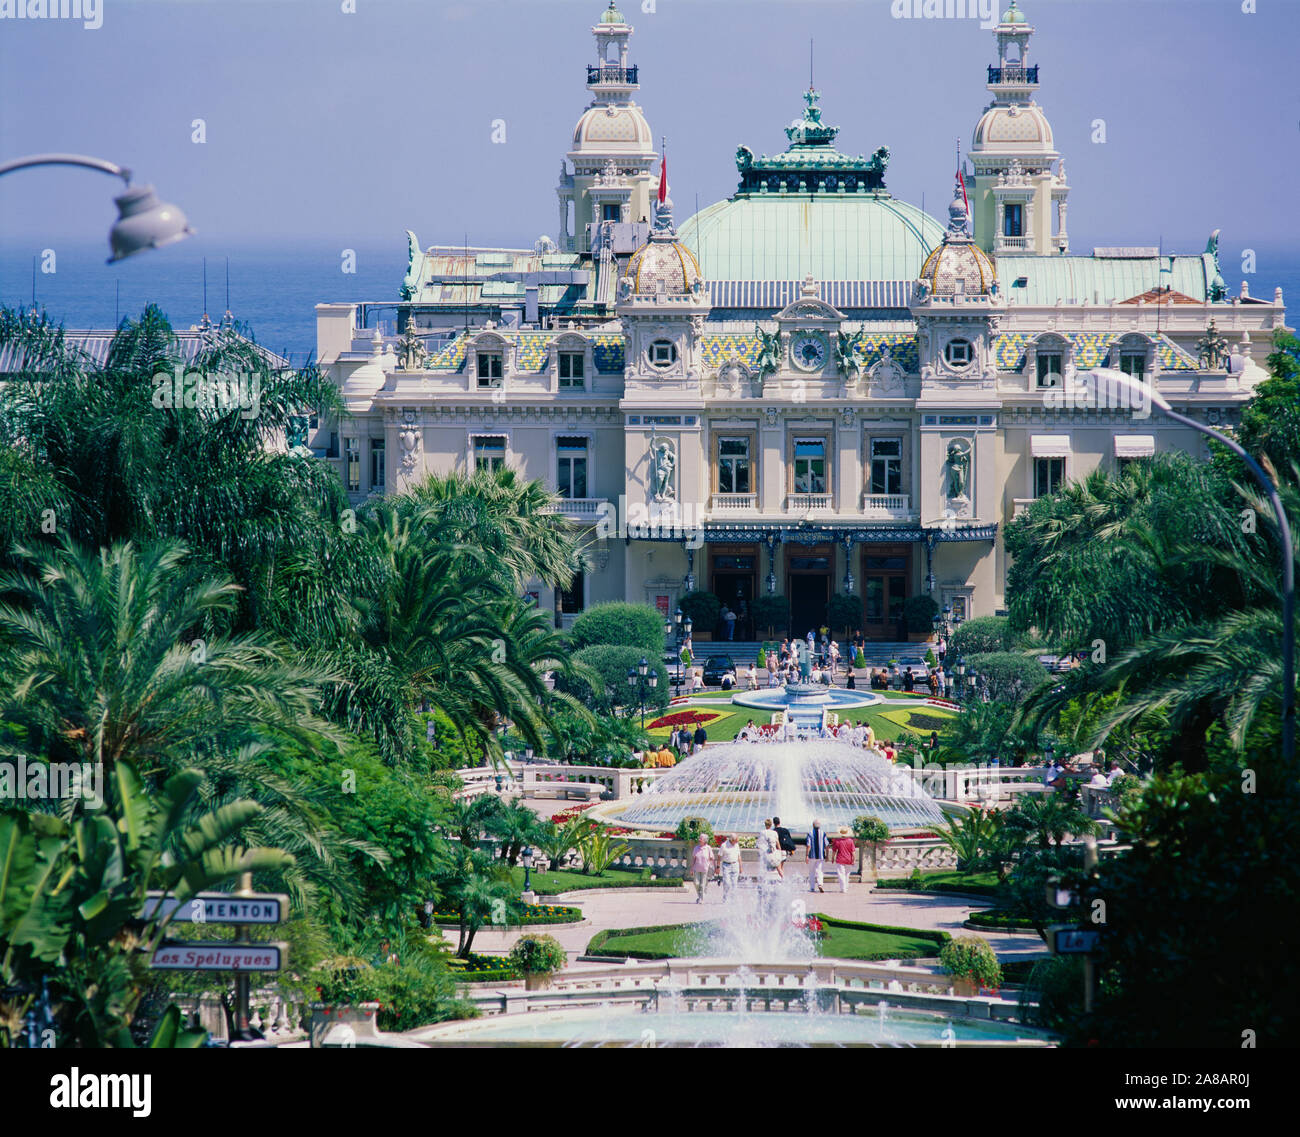 Façade d'un casino, Monte Carlo, Monaco, France Banque D'Images